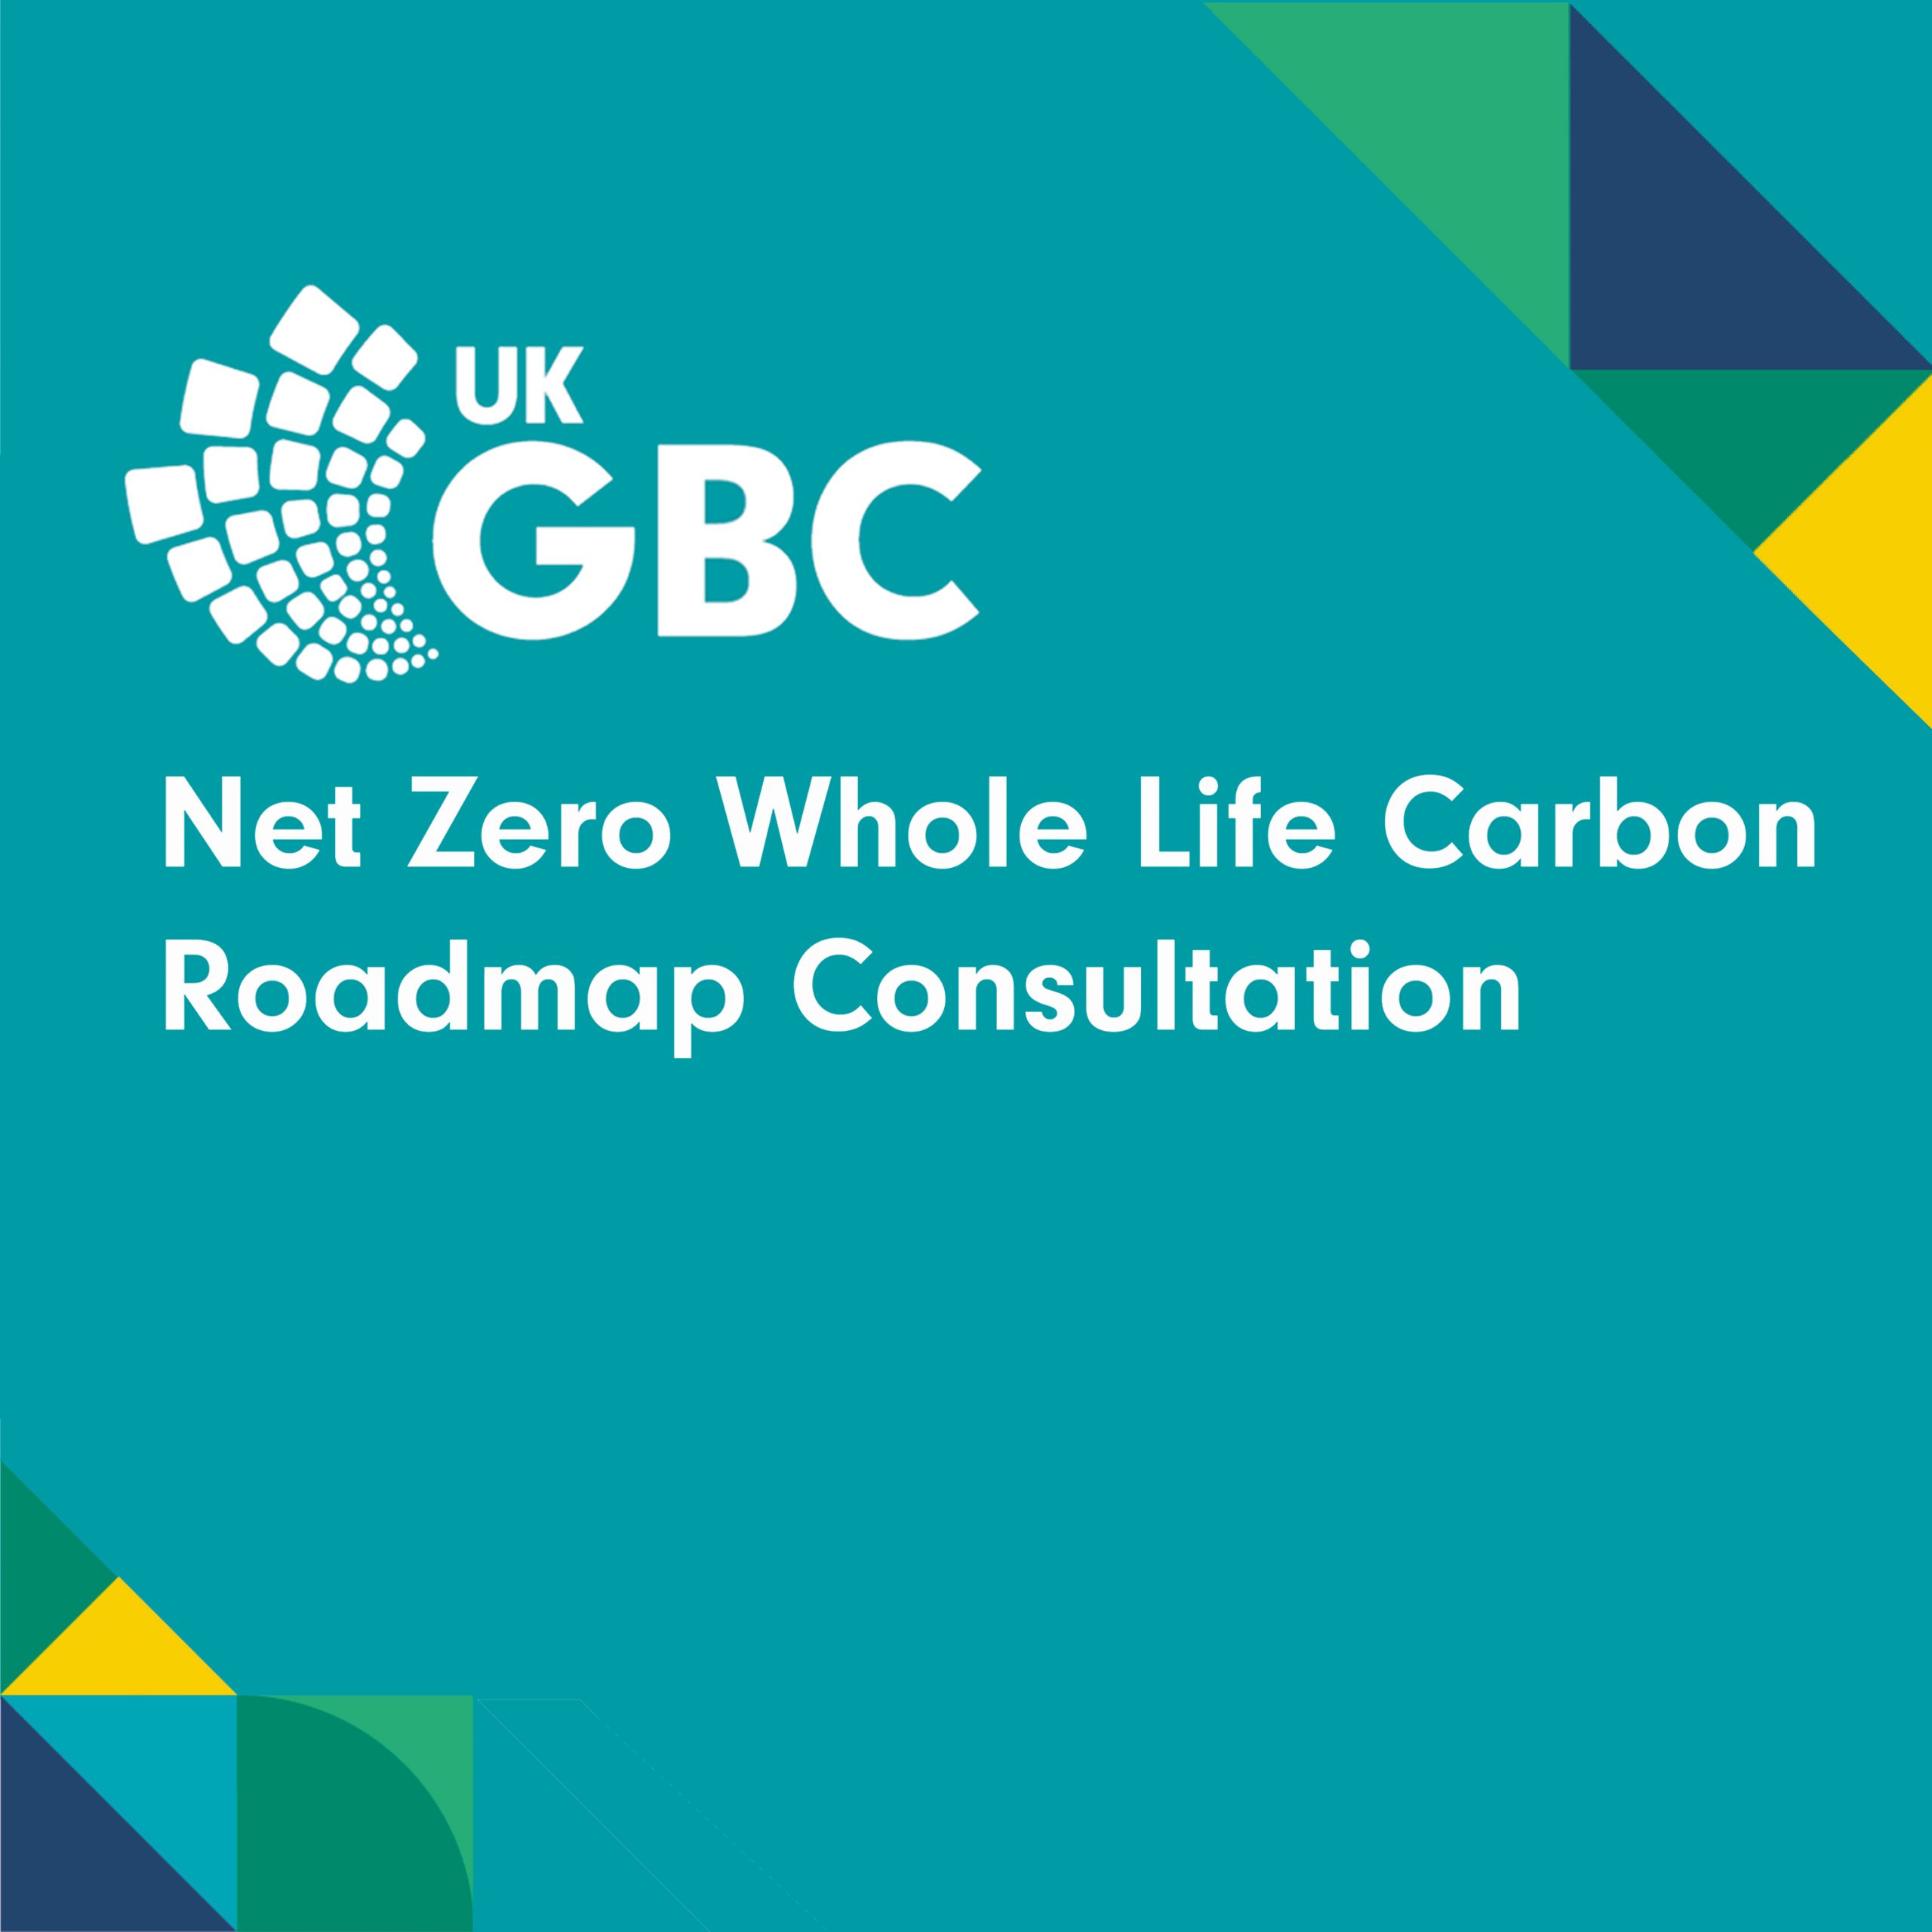 UKGBC Consults on Net Zero Whole Life Carbon Roadmap